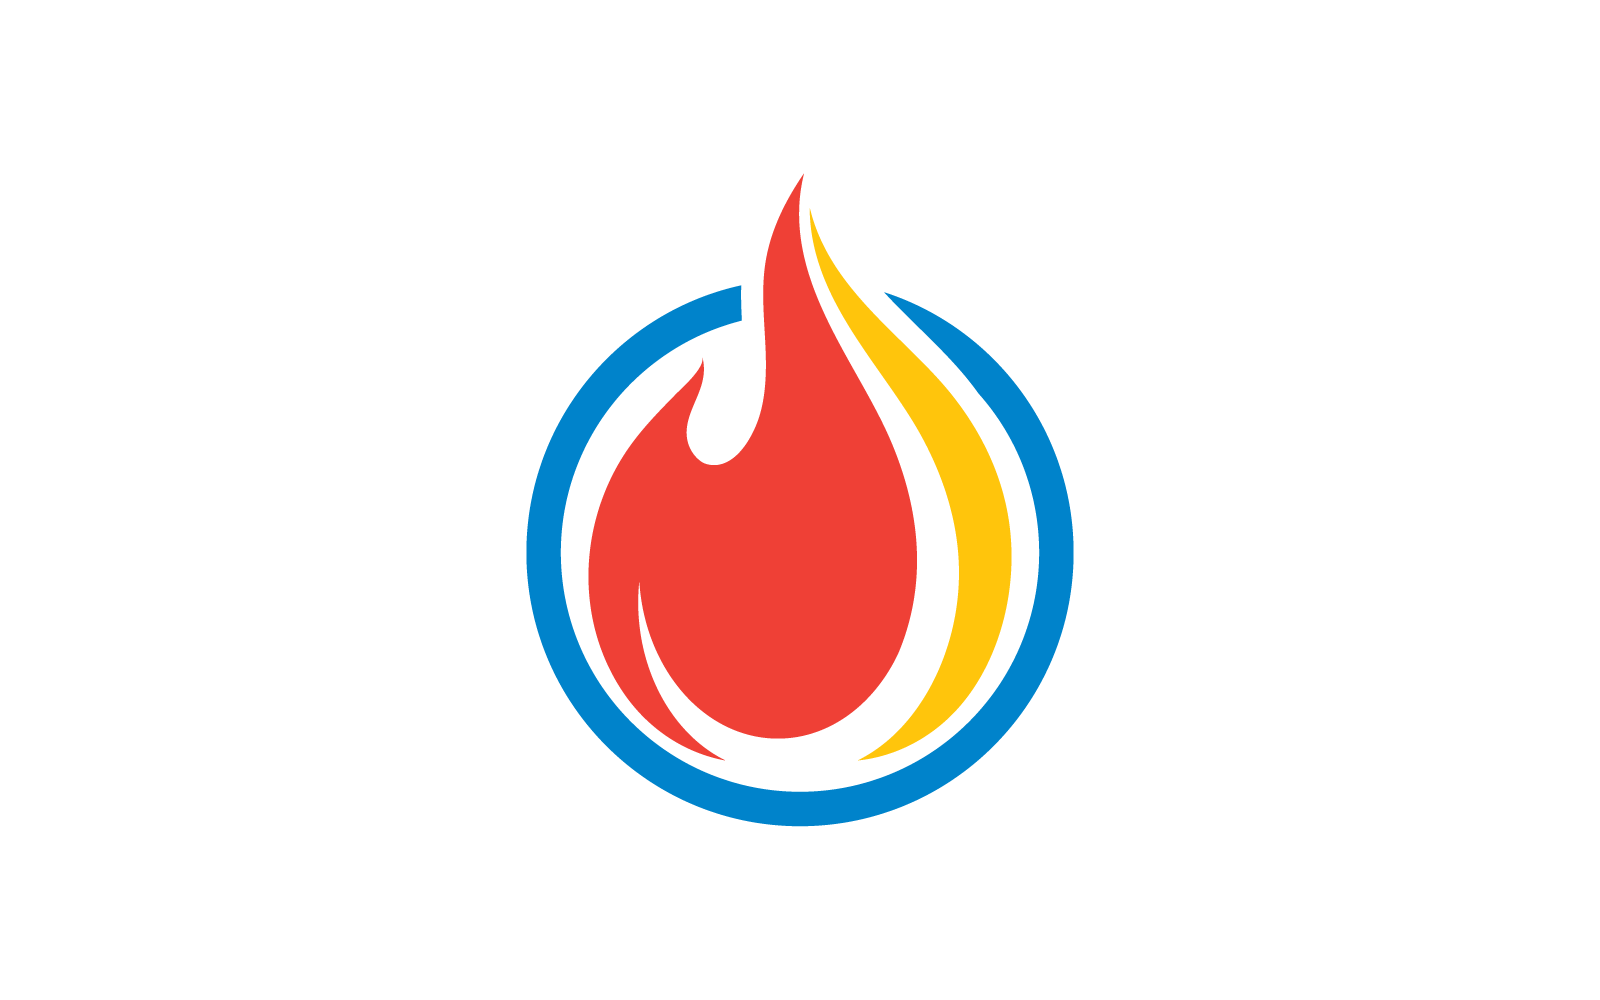 Fire flame Oil, gas and energy design logo concept Logo Template